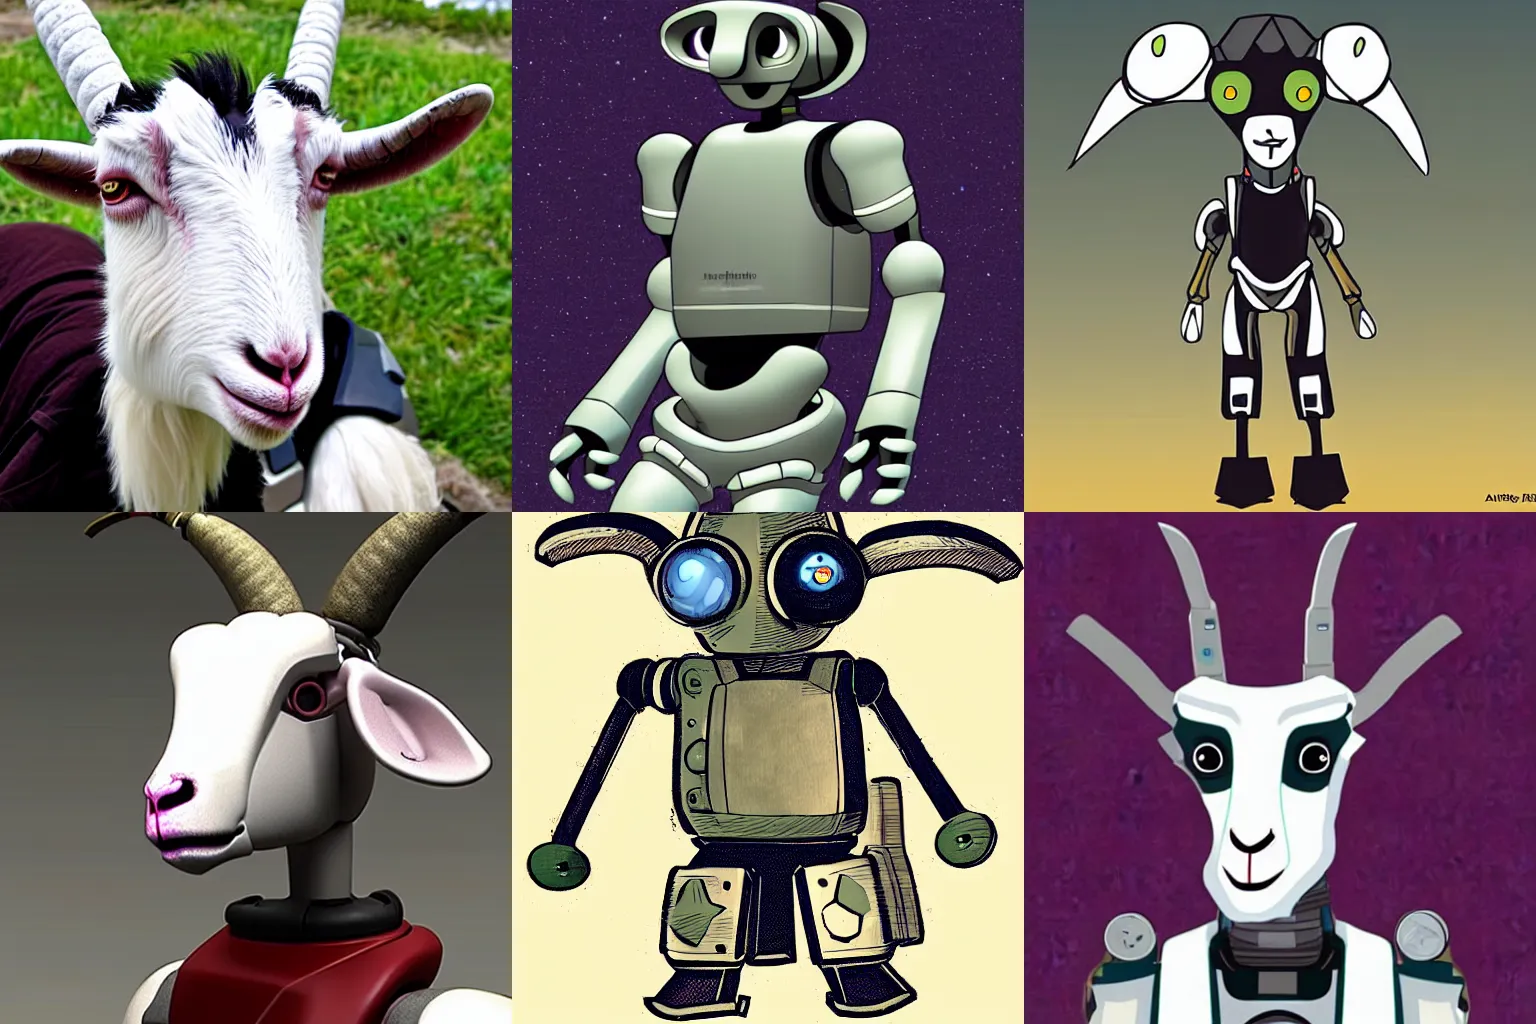 Prompt: anthropomorph scifi goat robot